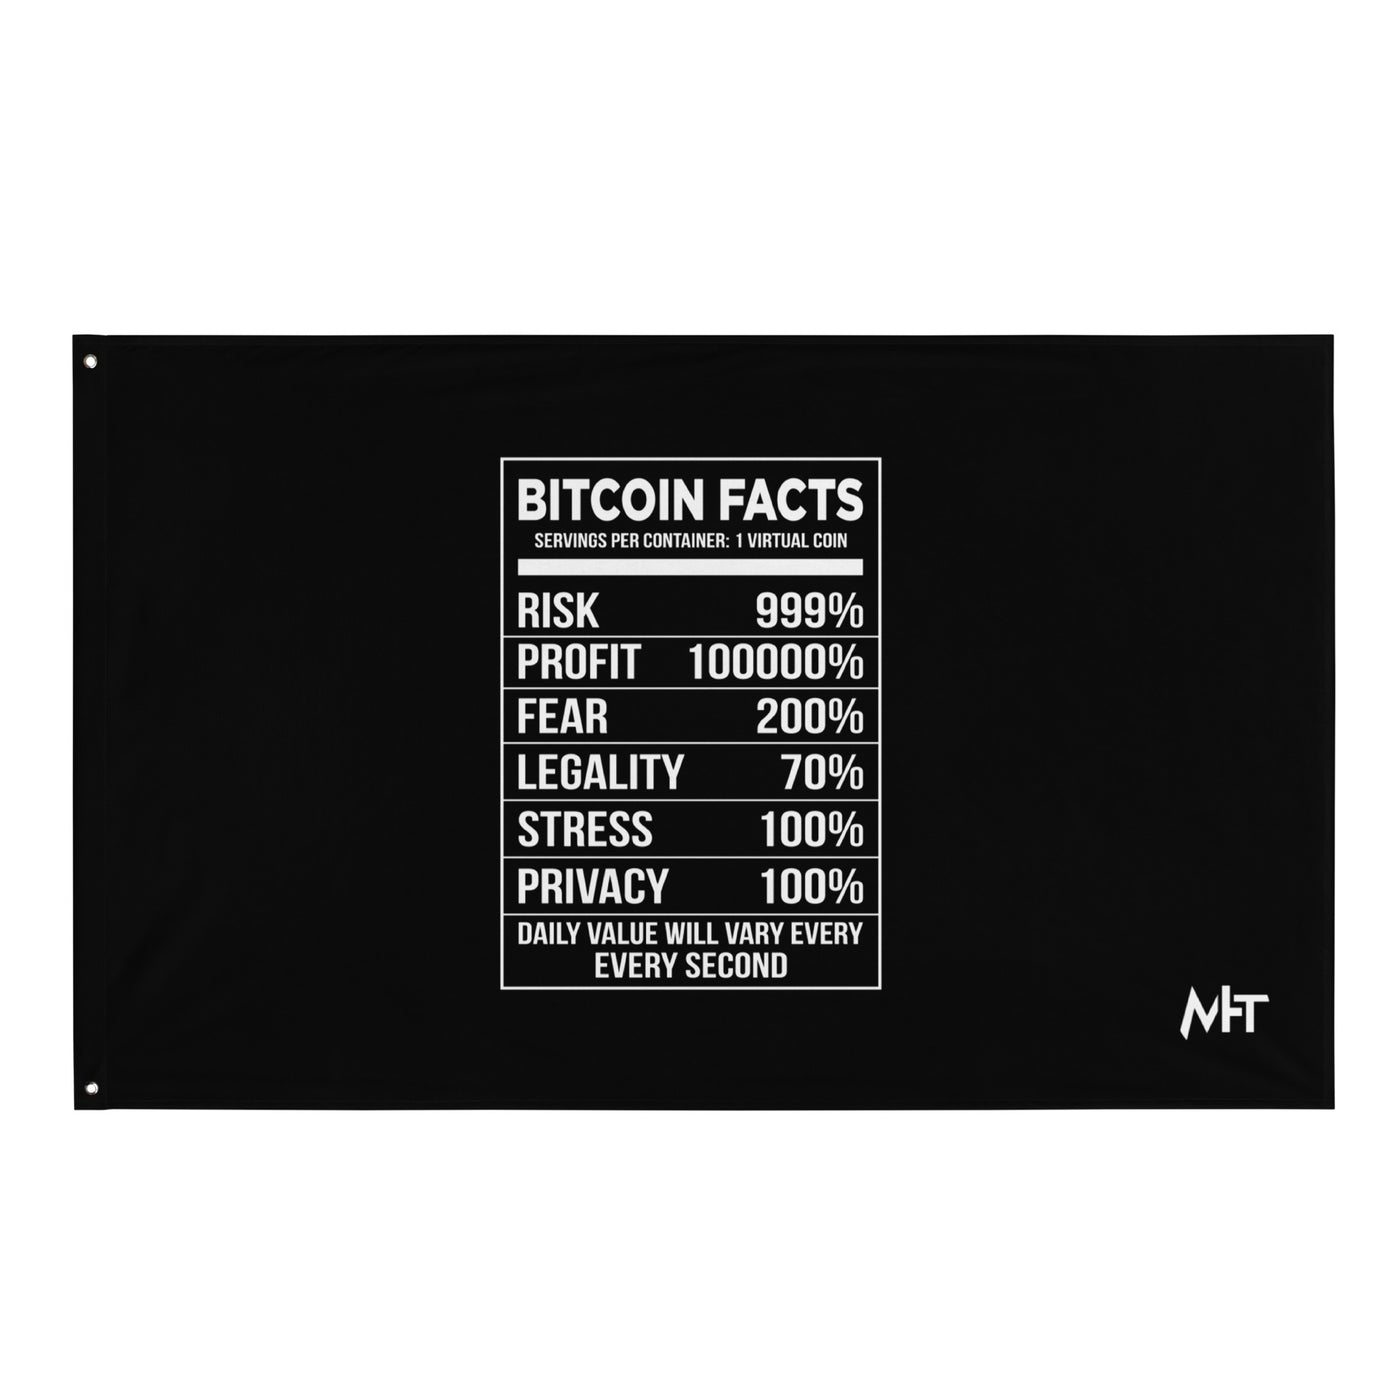 Bitcoin Facts - Flag